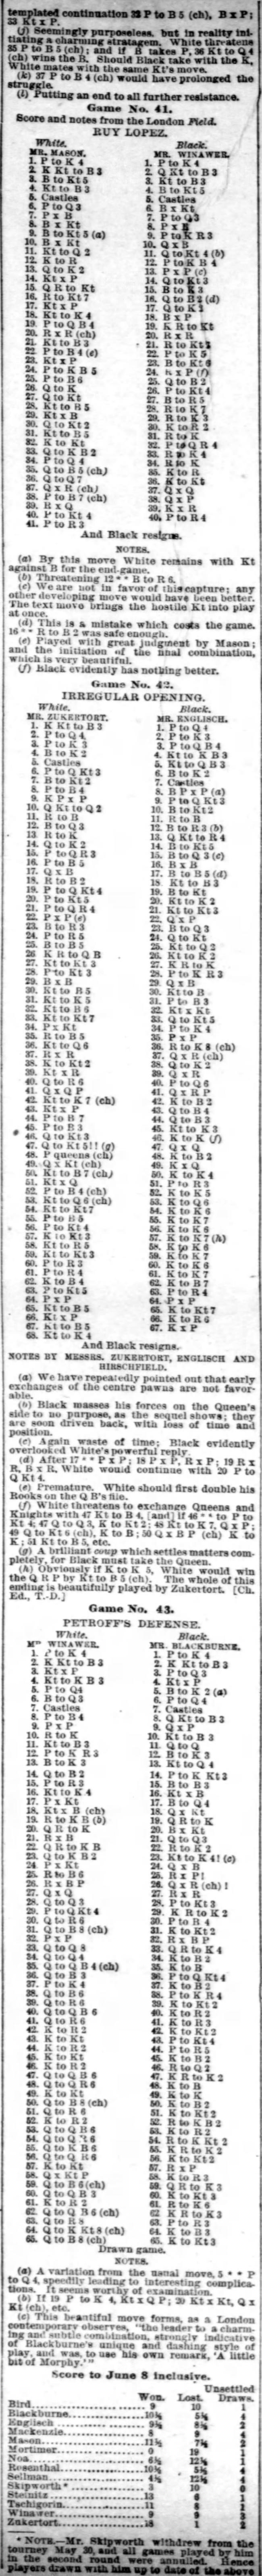 1883.06.10-02 New Orleans Times-Democrat.jpg